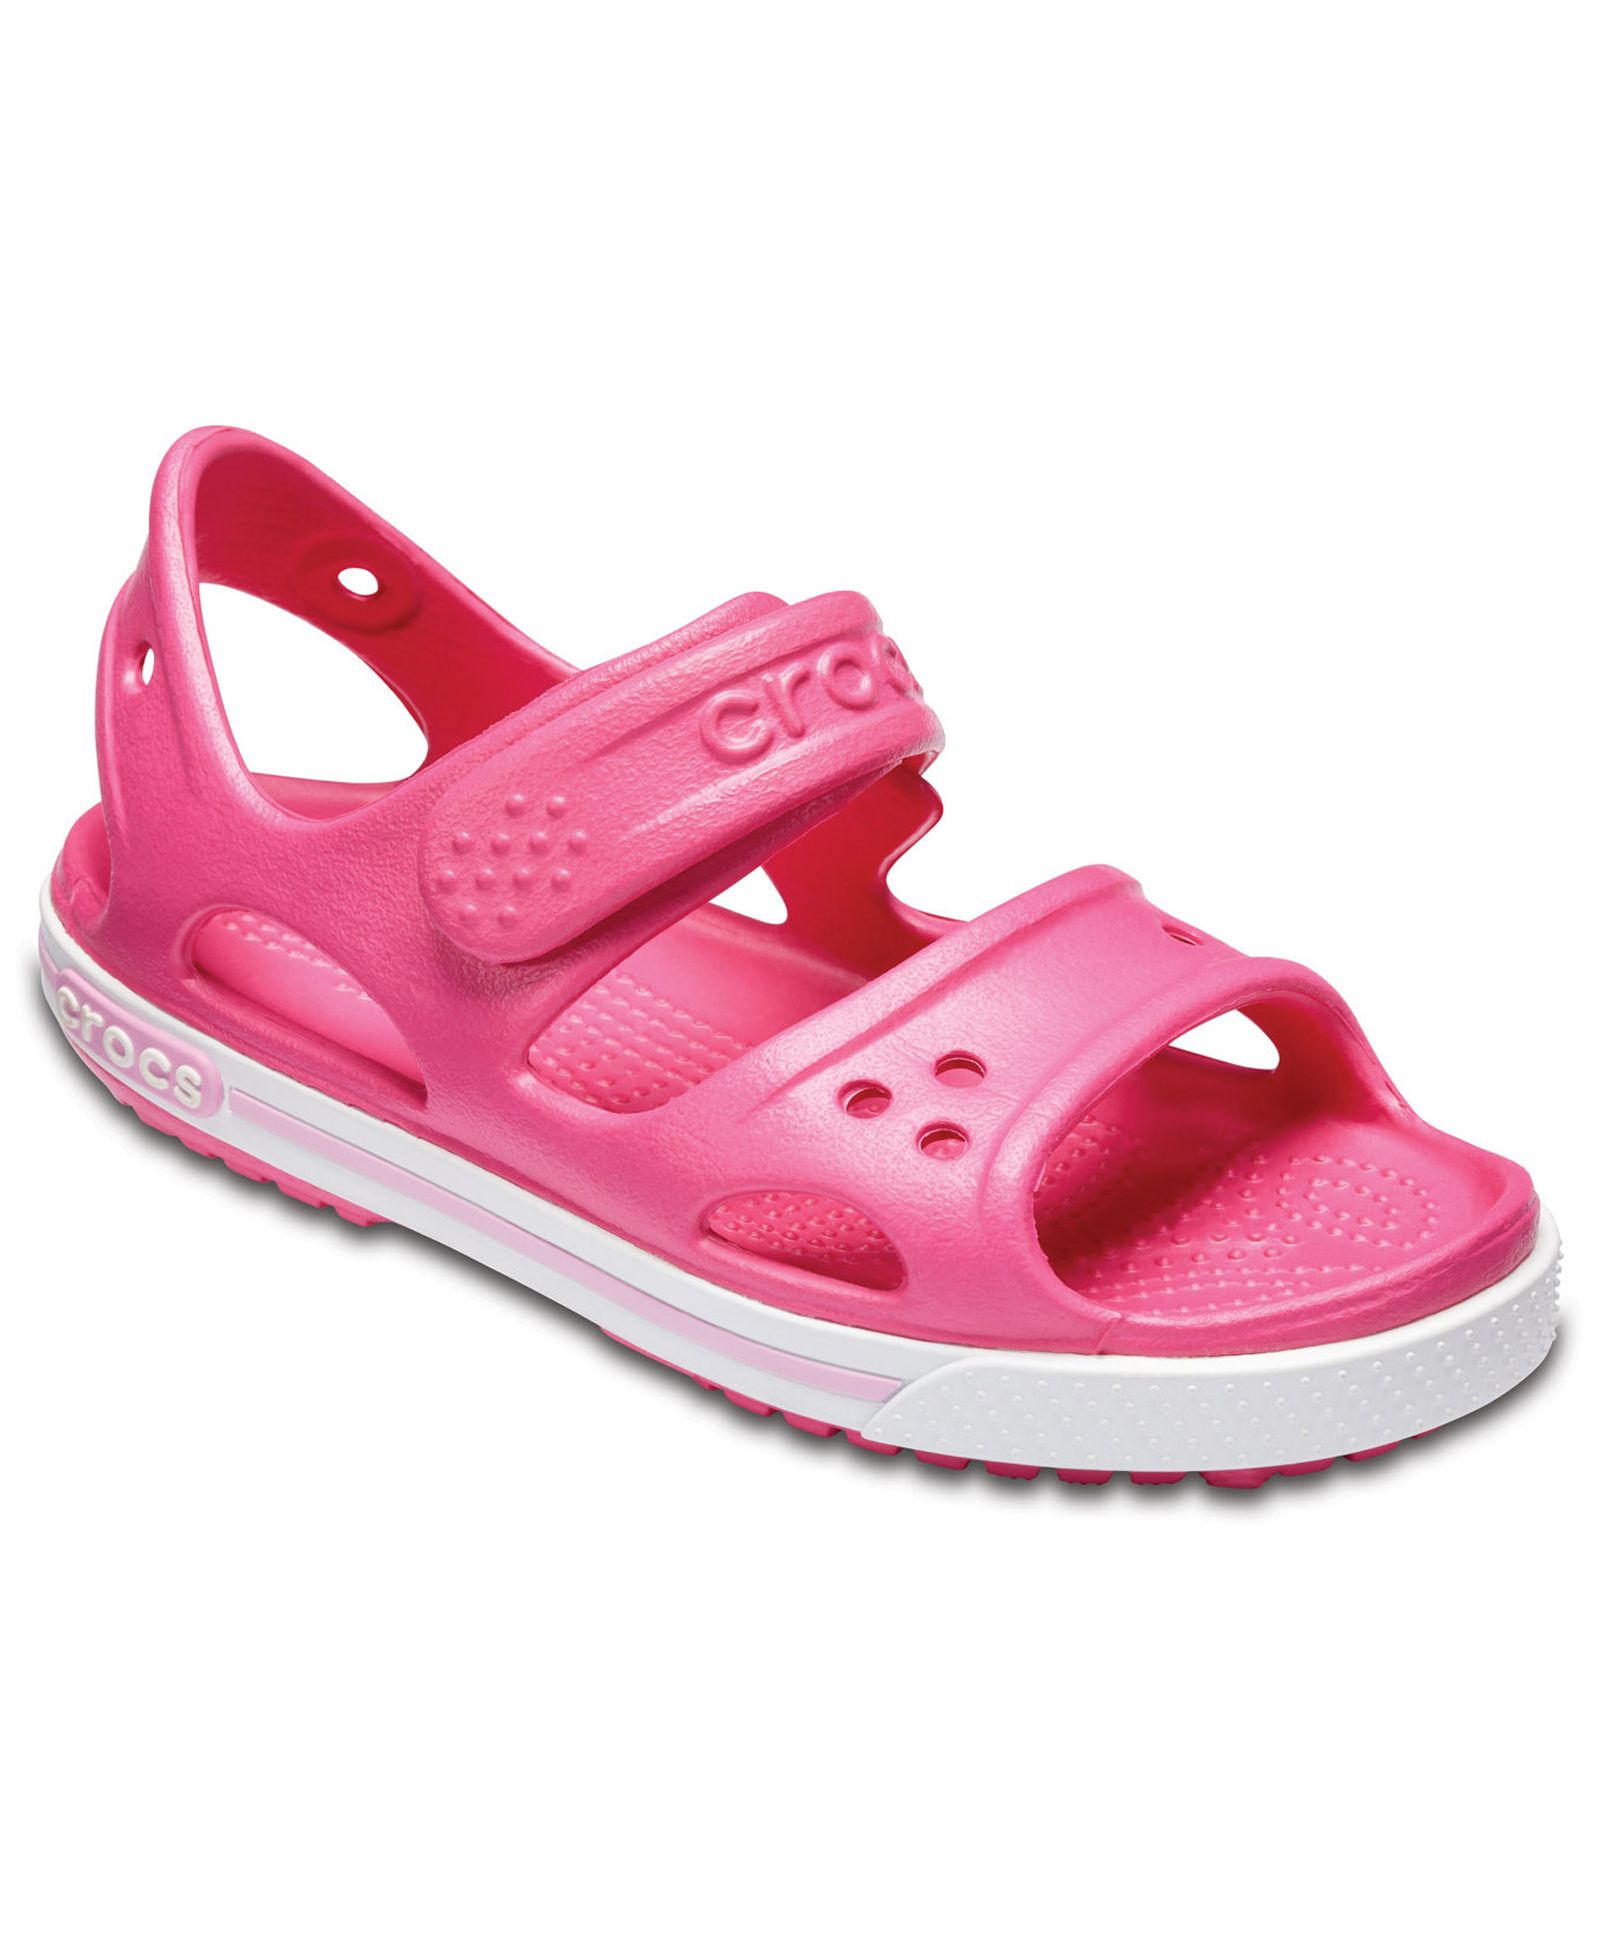 Розовые сандали. Сандалии Crocs Crocband. Crocs Crocband II Sandal PS. Сандалии Crocs Crocband Sandal. Crocs Crocband розовые.